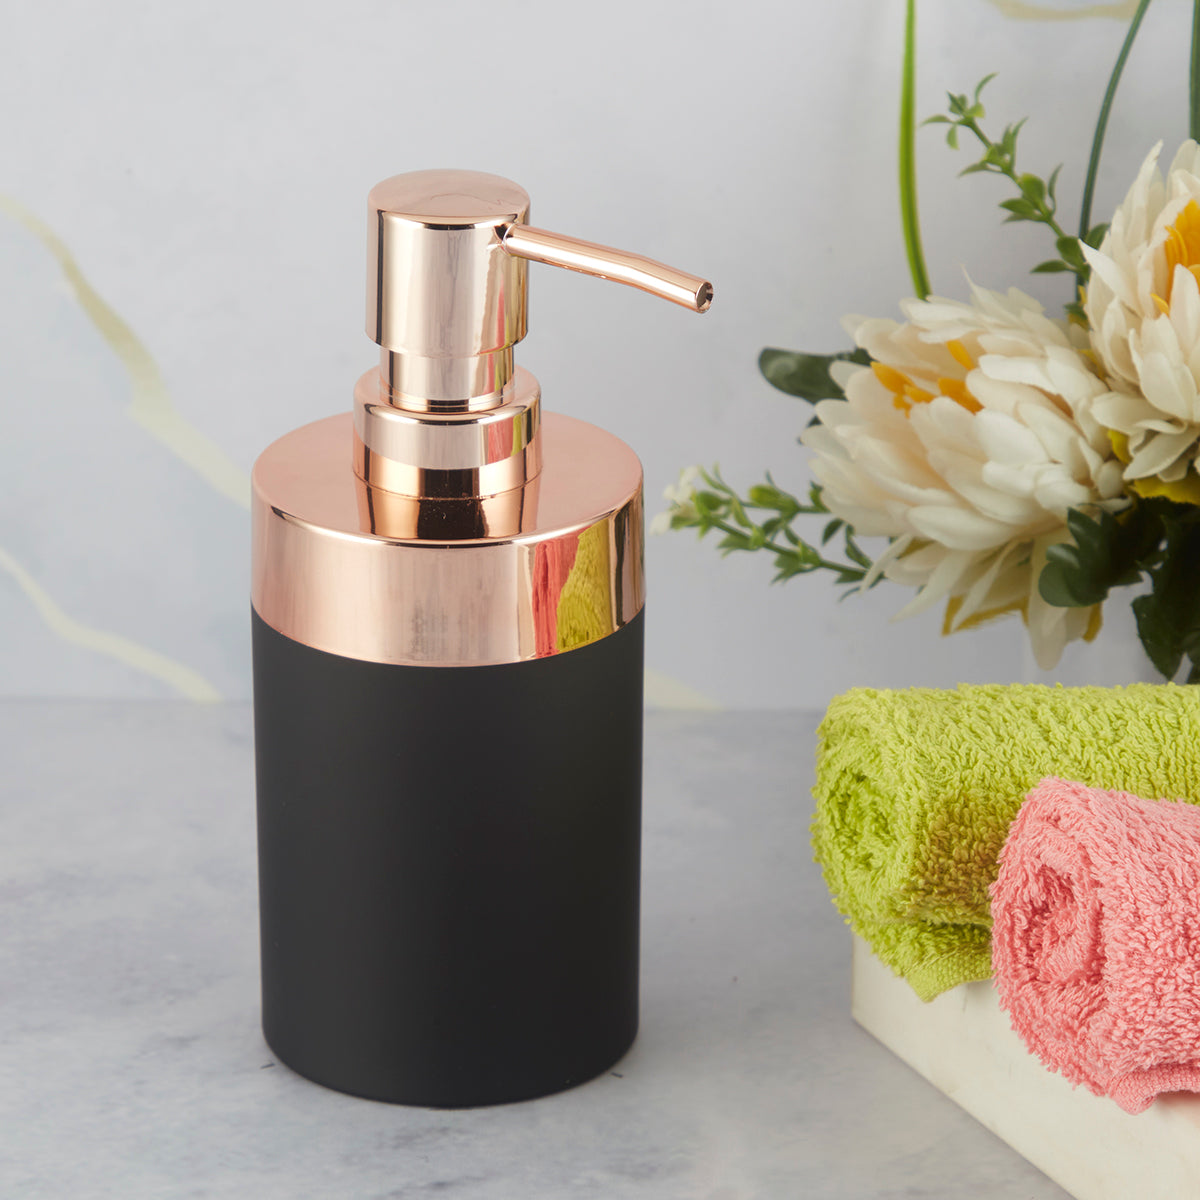 Acrylic Soap Dispenser Pump for Bathroom (9958)